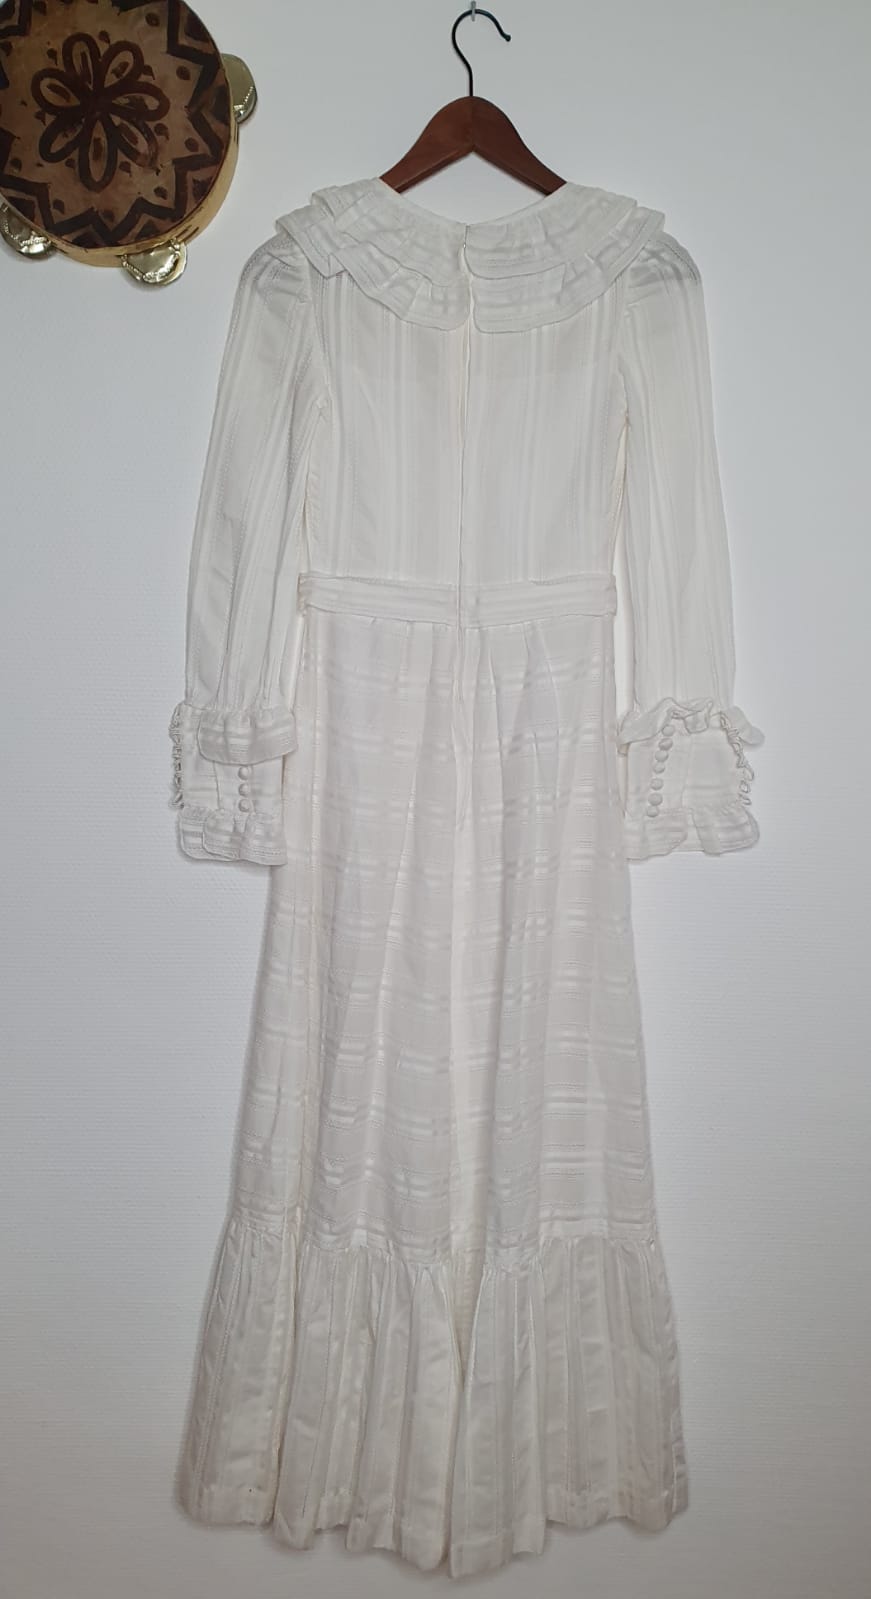 robe blanche vintage bohème dos